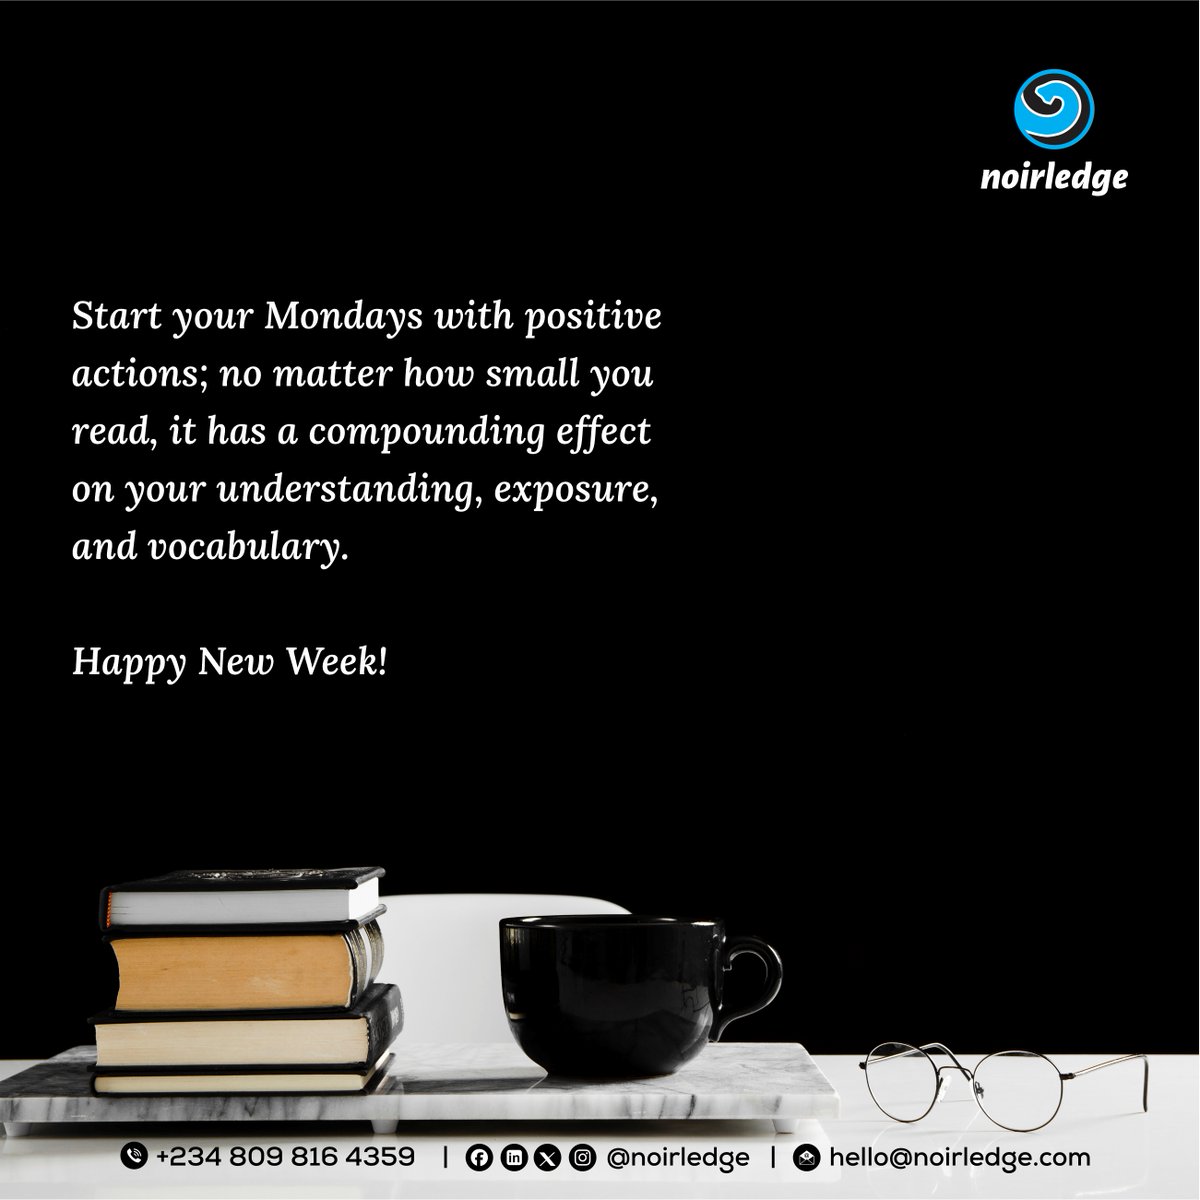 Start your week with positive actions.
Happy New Week!

#Noirledge
#Winepress
#Mondaymotivation
#BookLovers
#Reading
#NoirledgePublishing
#PublishersInIbadan
#PublishersInNigeria
#PublishingCompany
#Publishers
#Publishing